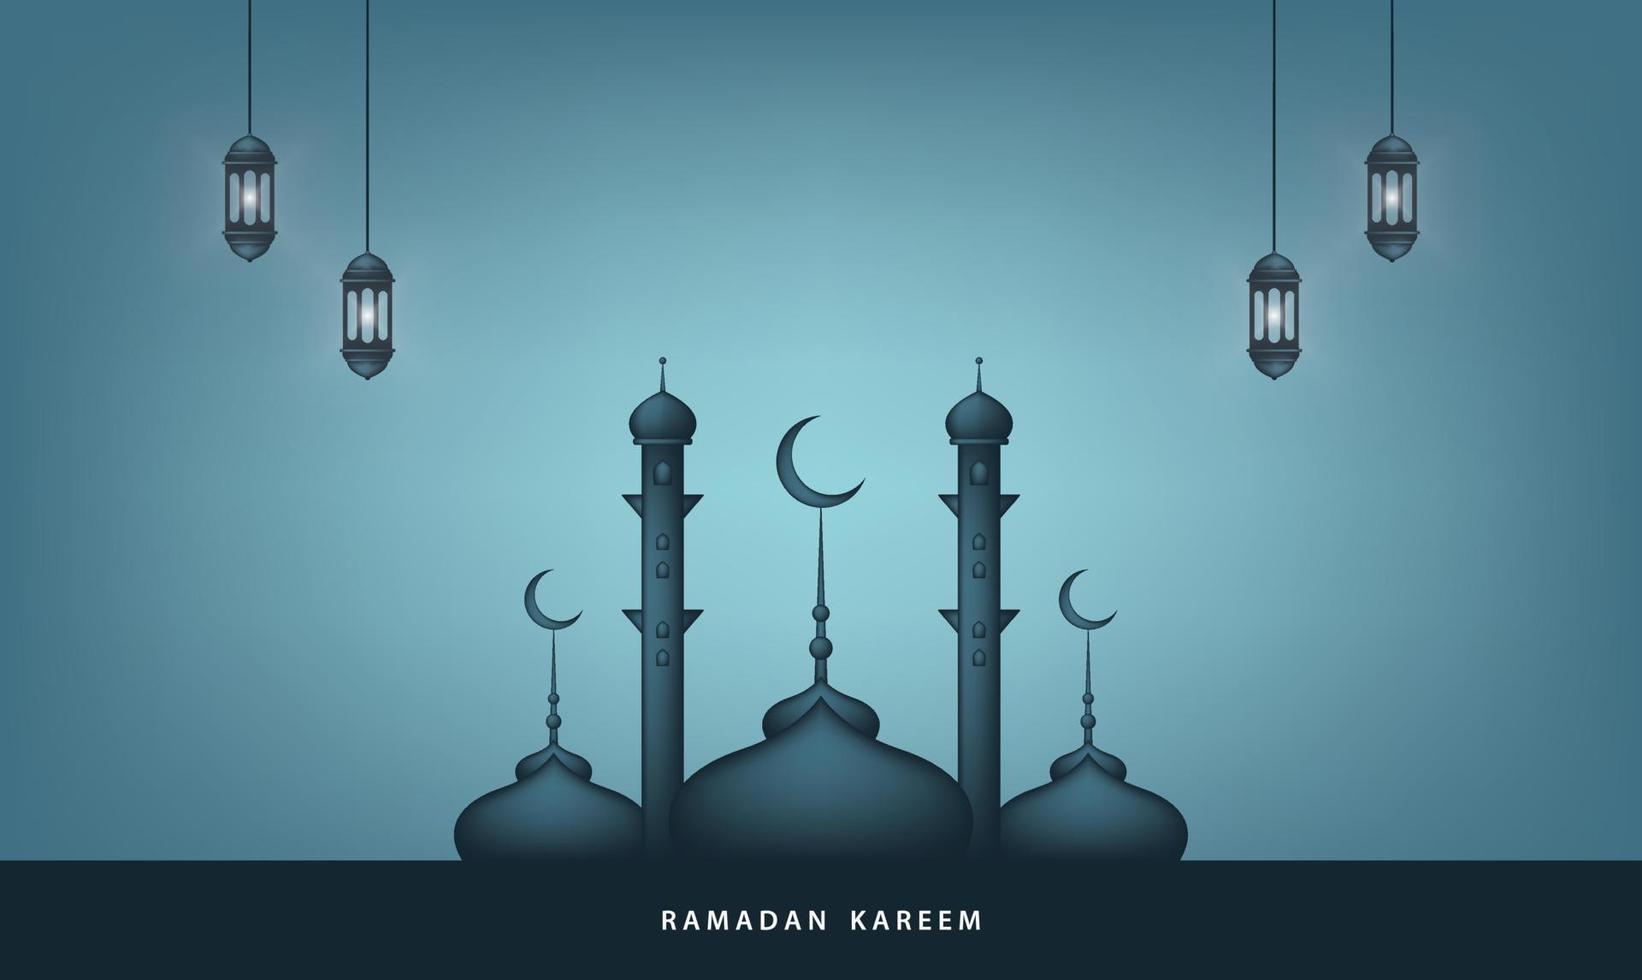 Realistic ramadan kareem flat eid al-fitr illustration mubarak wallpaper hari raya aidilfitri vector